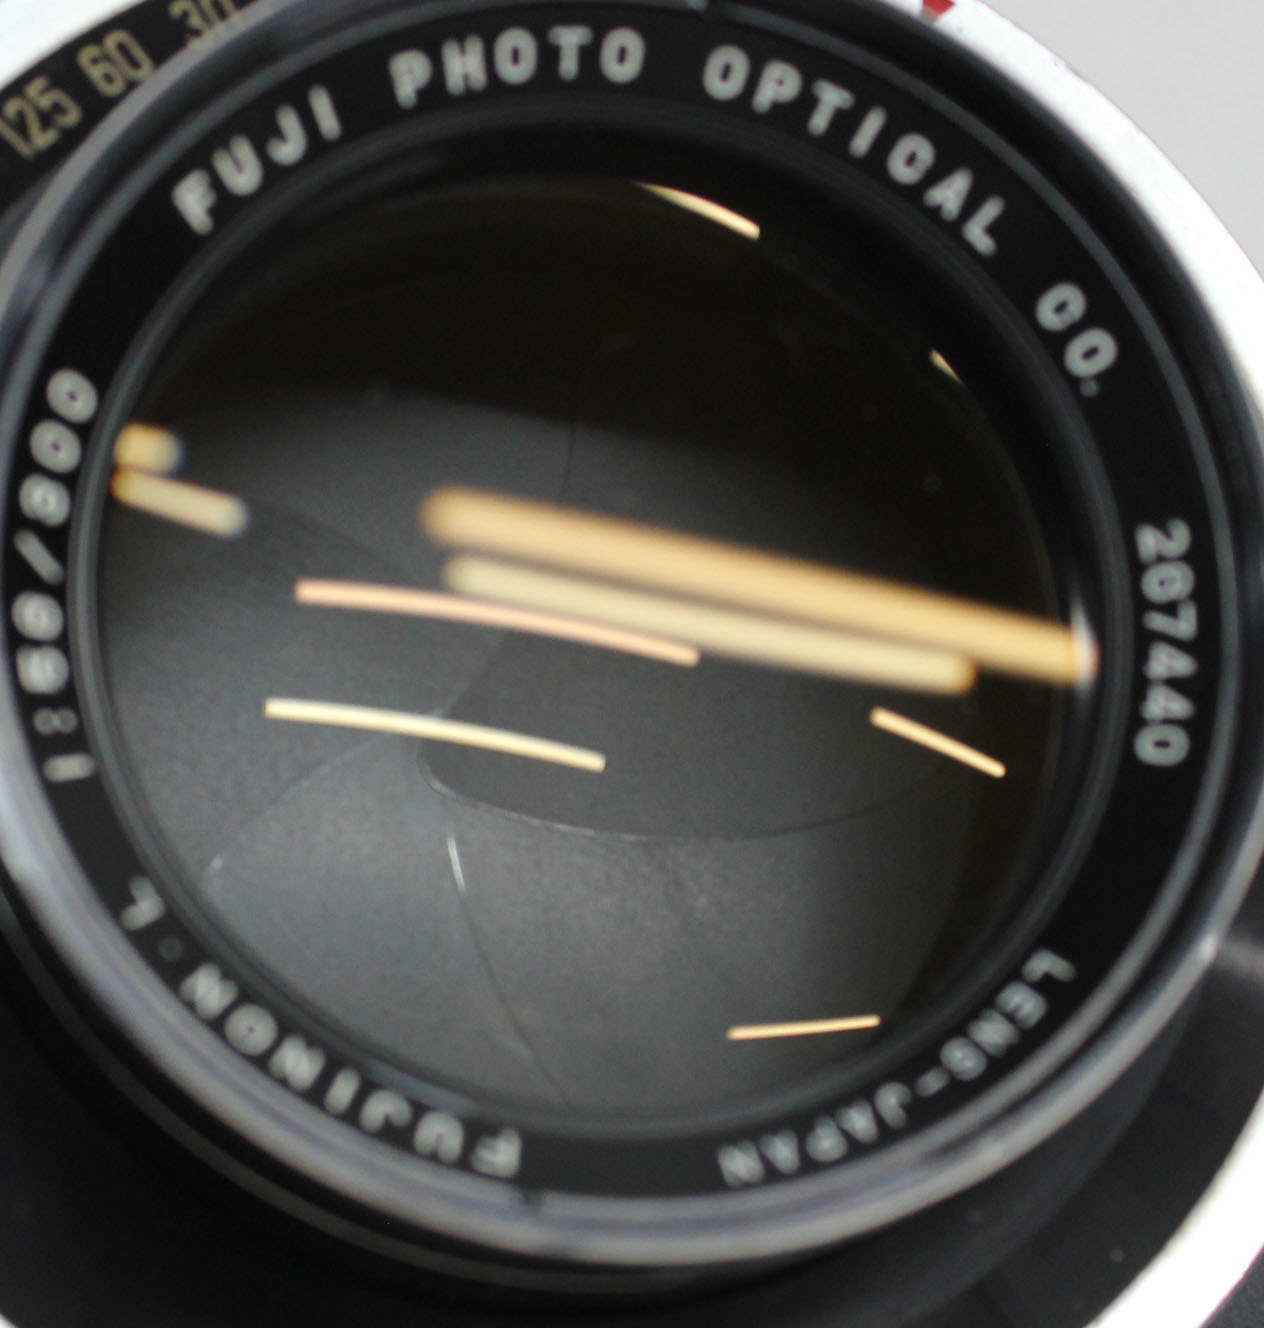  Fuji Fujinon L 300mm F/5.6 8x10 4x5 Large Format Lens Copal Shutter from Japan Photo 9